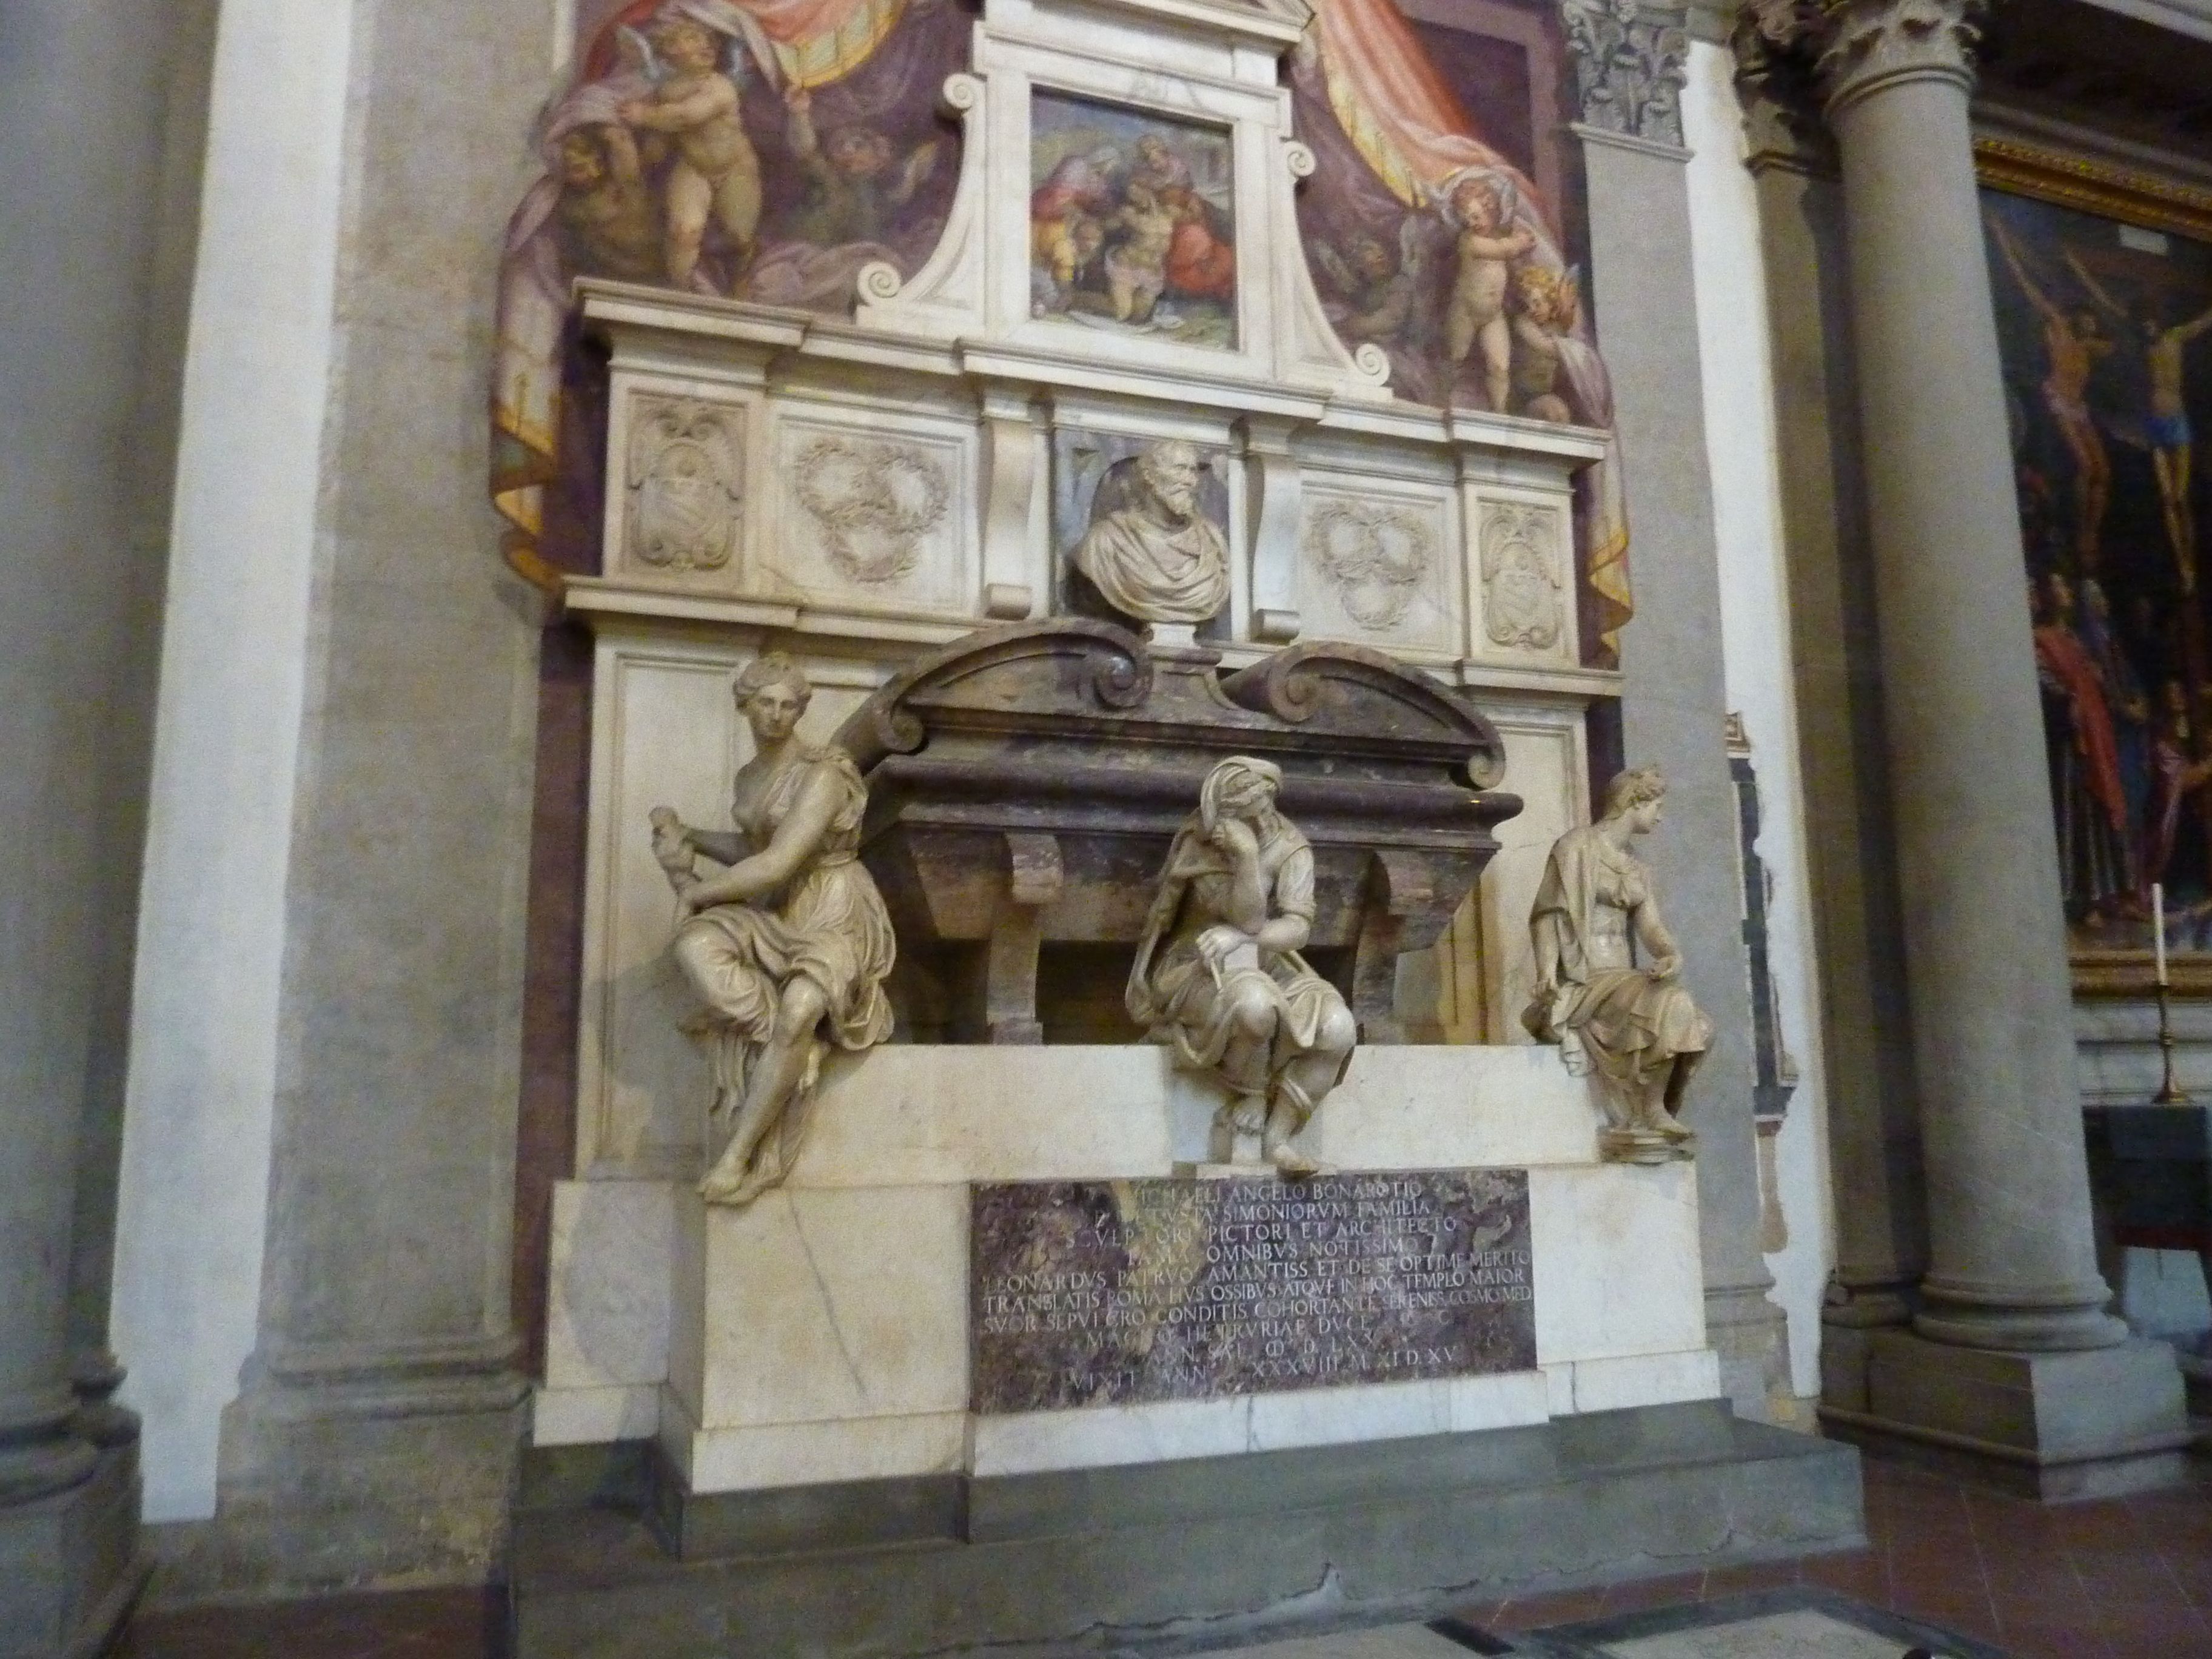 The Basilica of Santa Croce